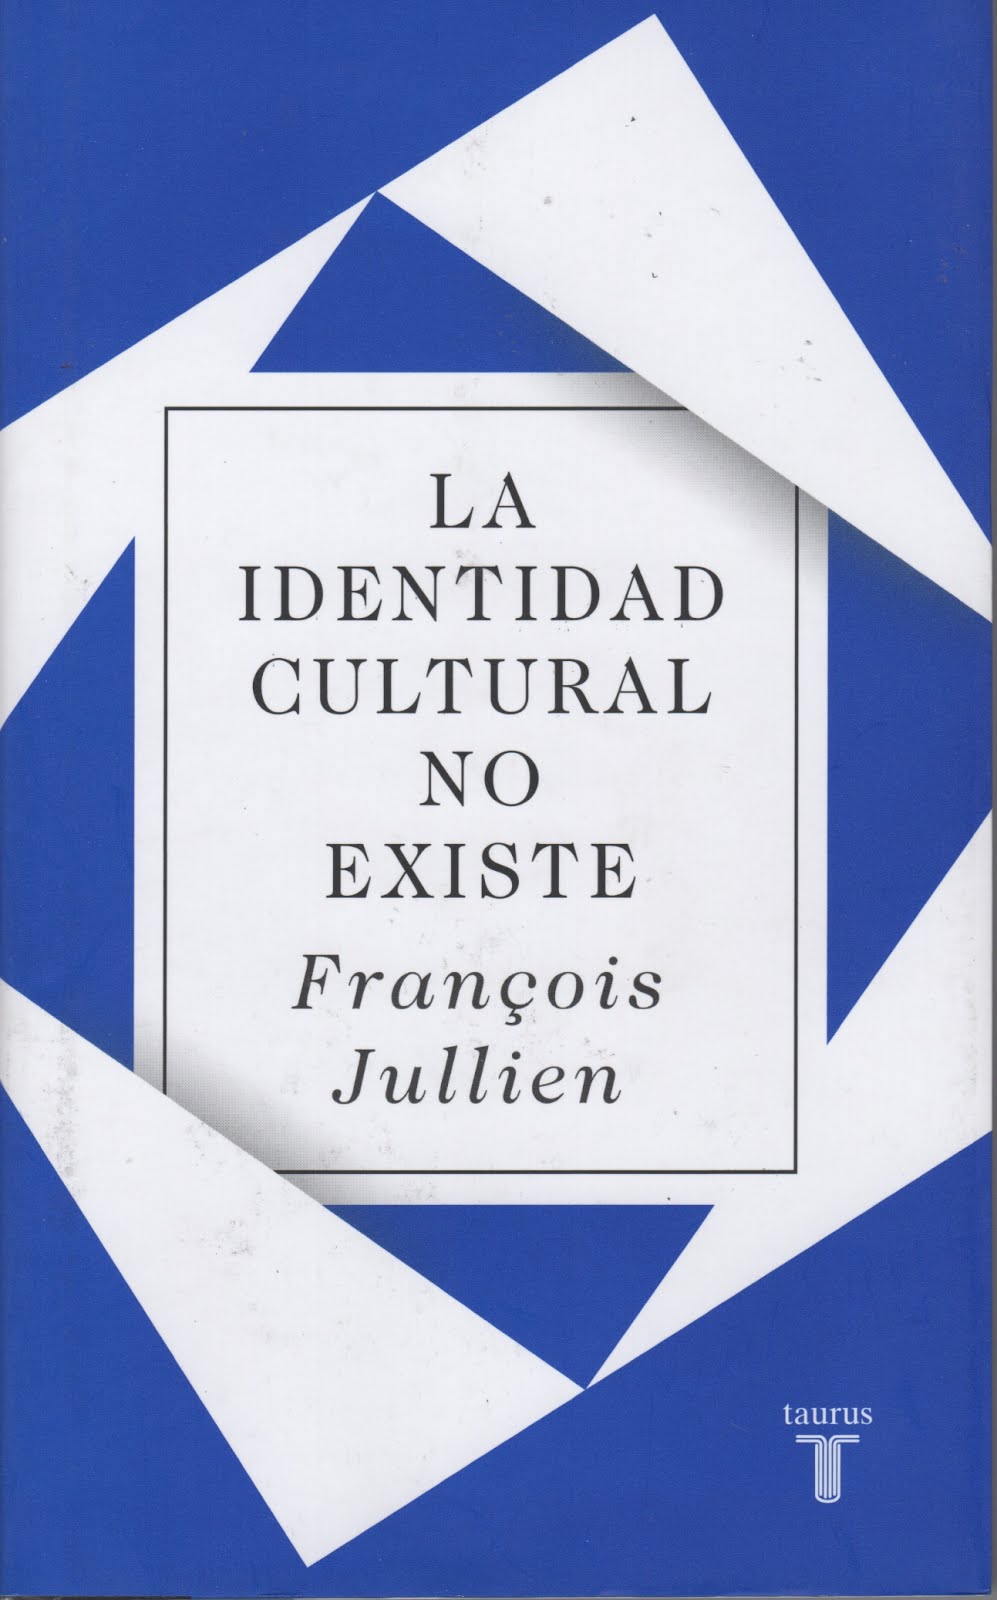 François Jullien (La identidad cultural no existe)